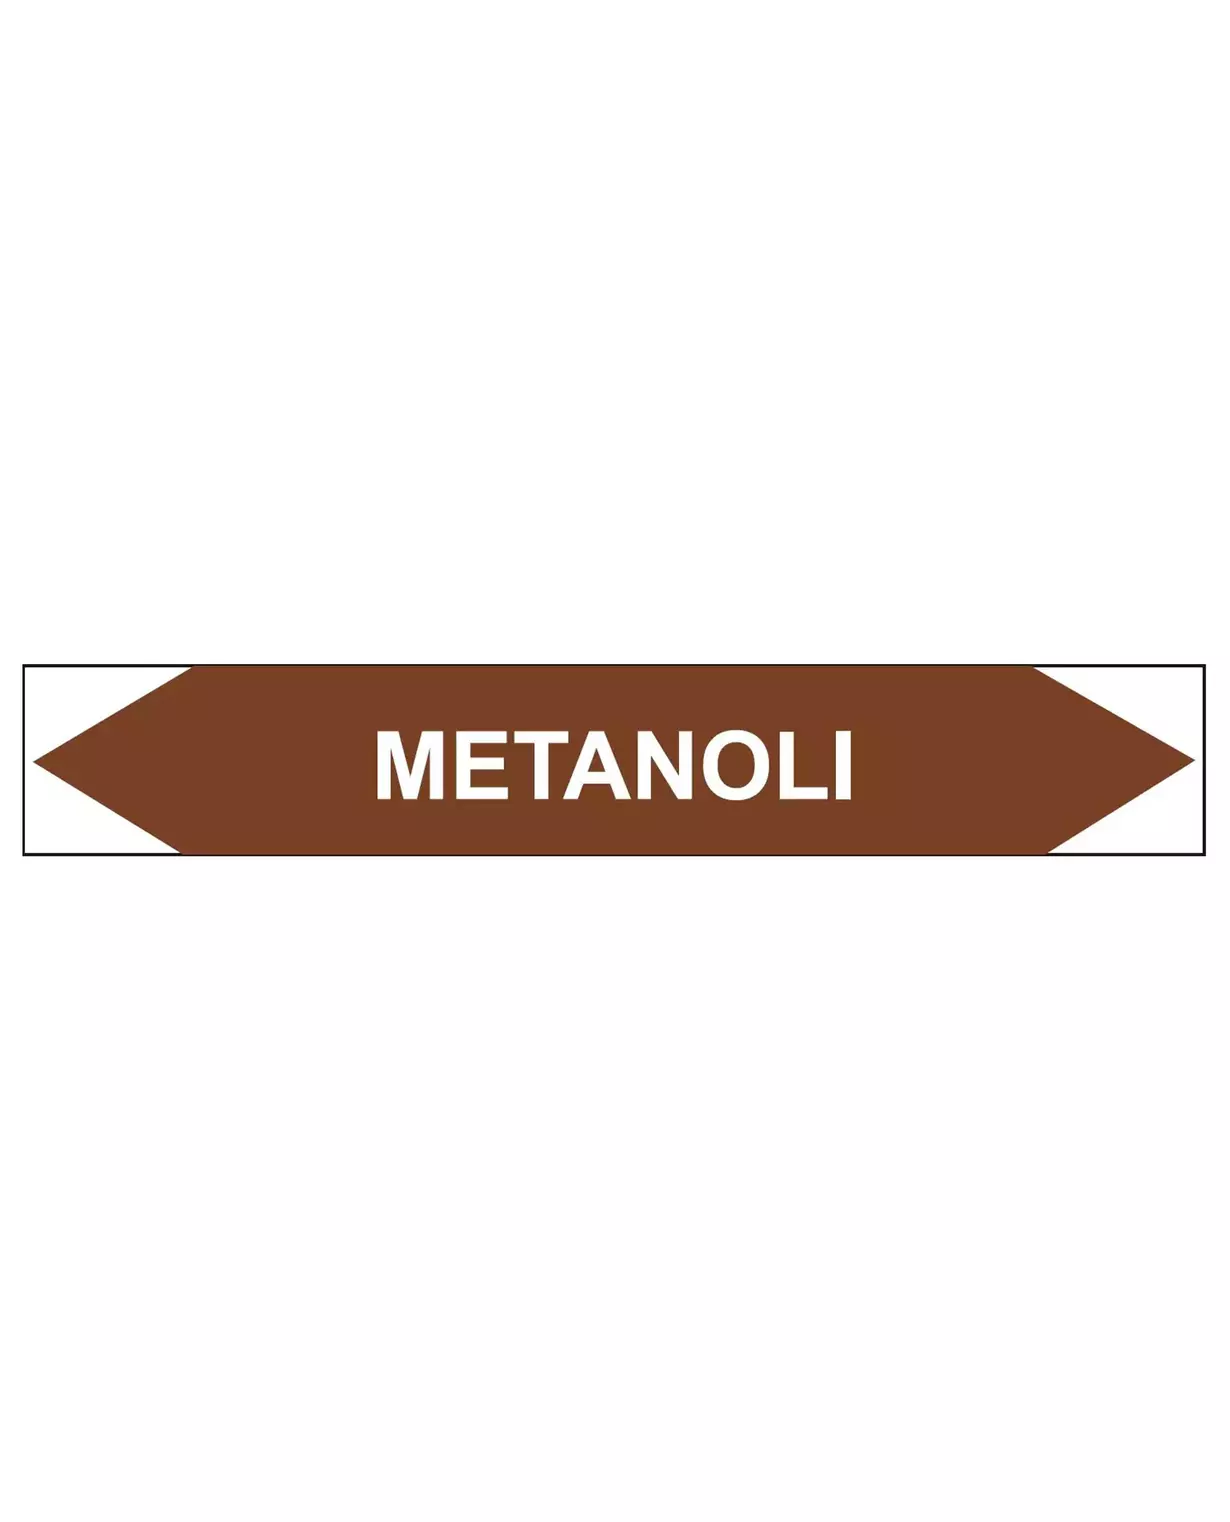 Metanoli, 160x25 mm